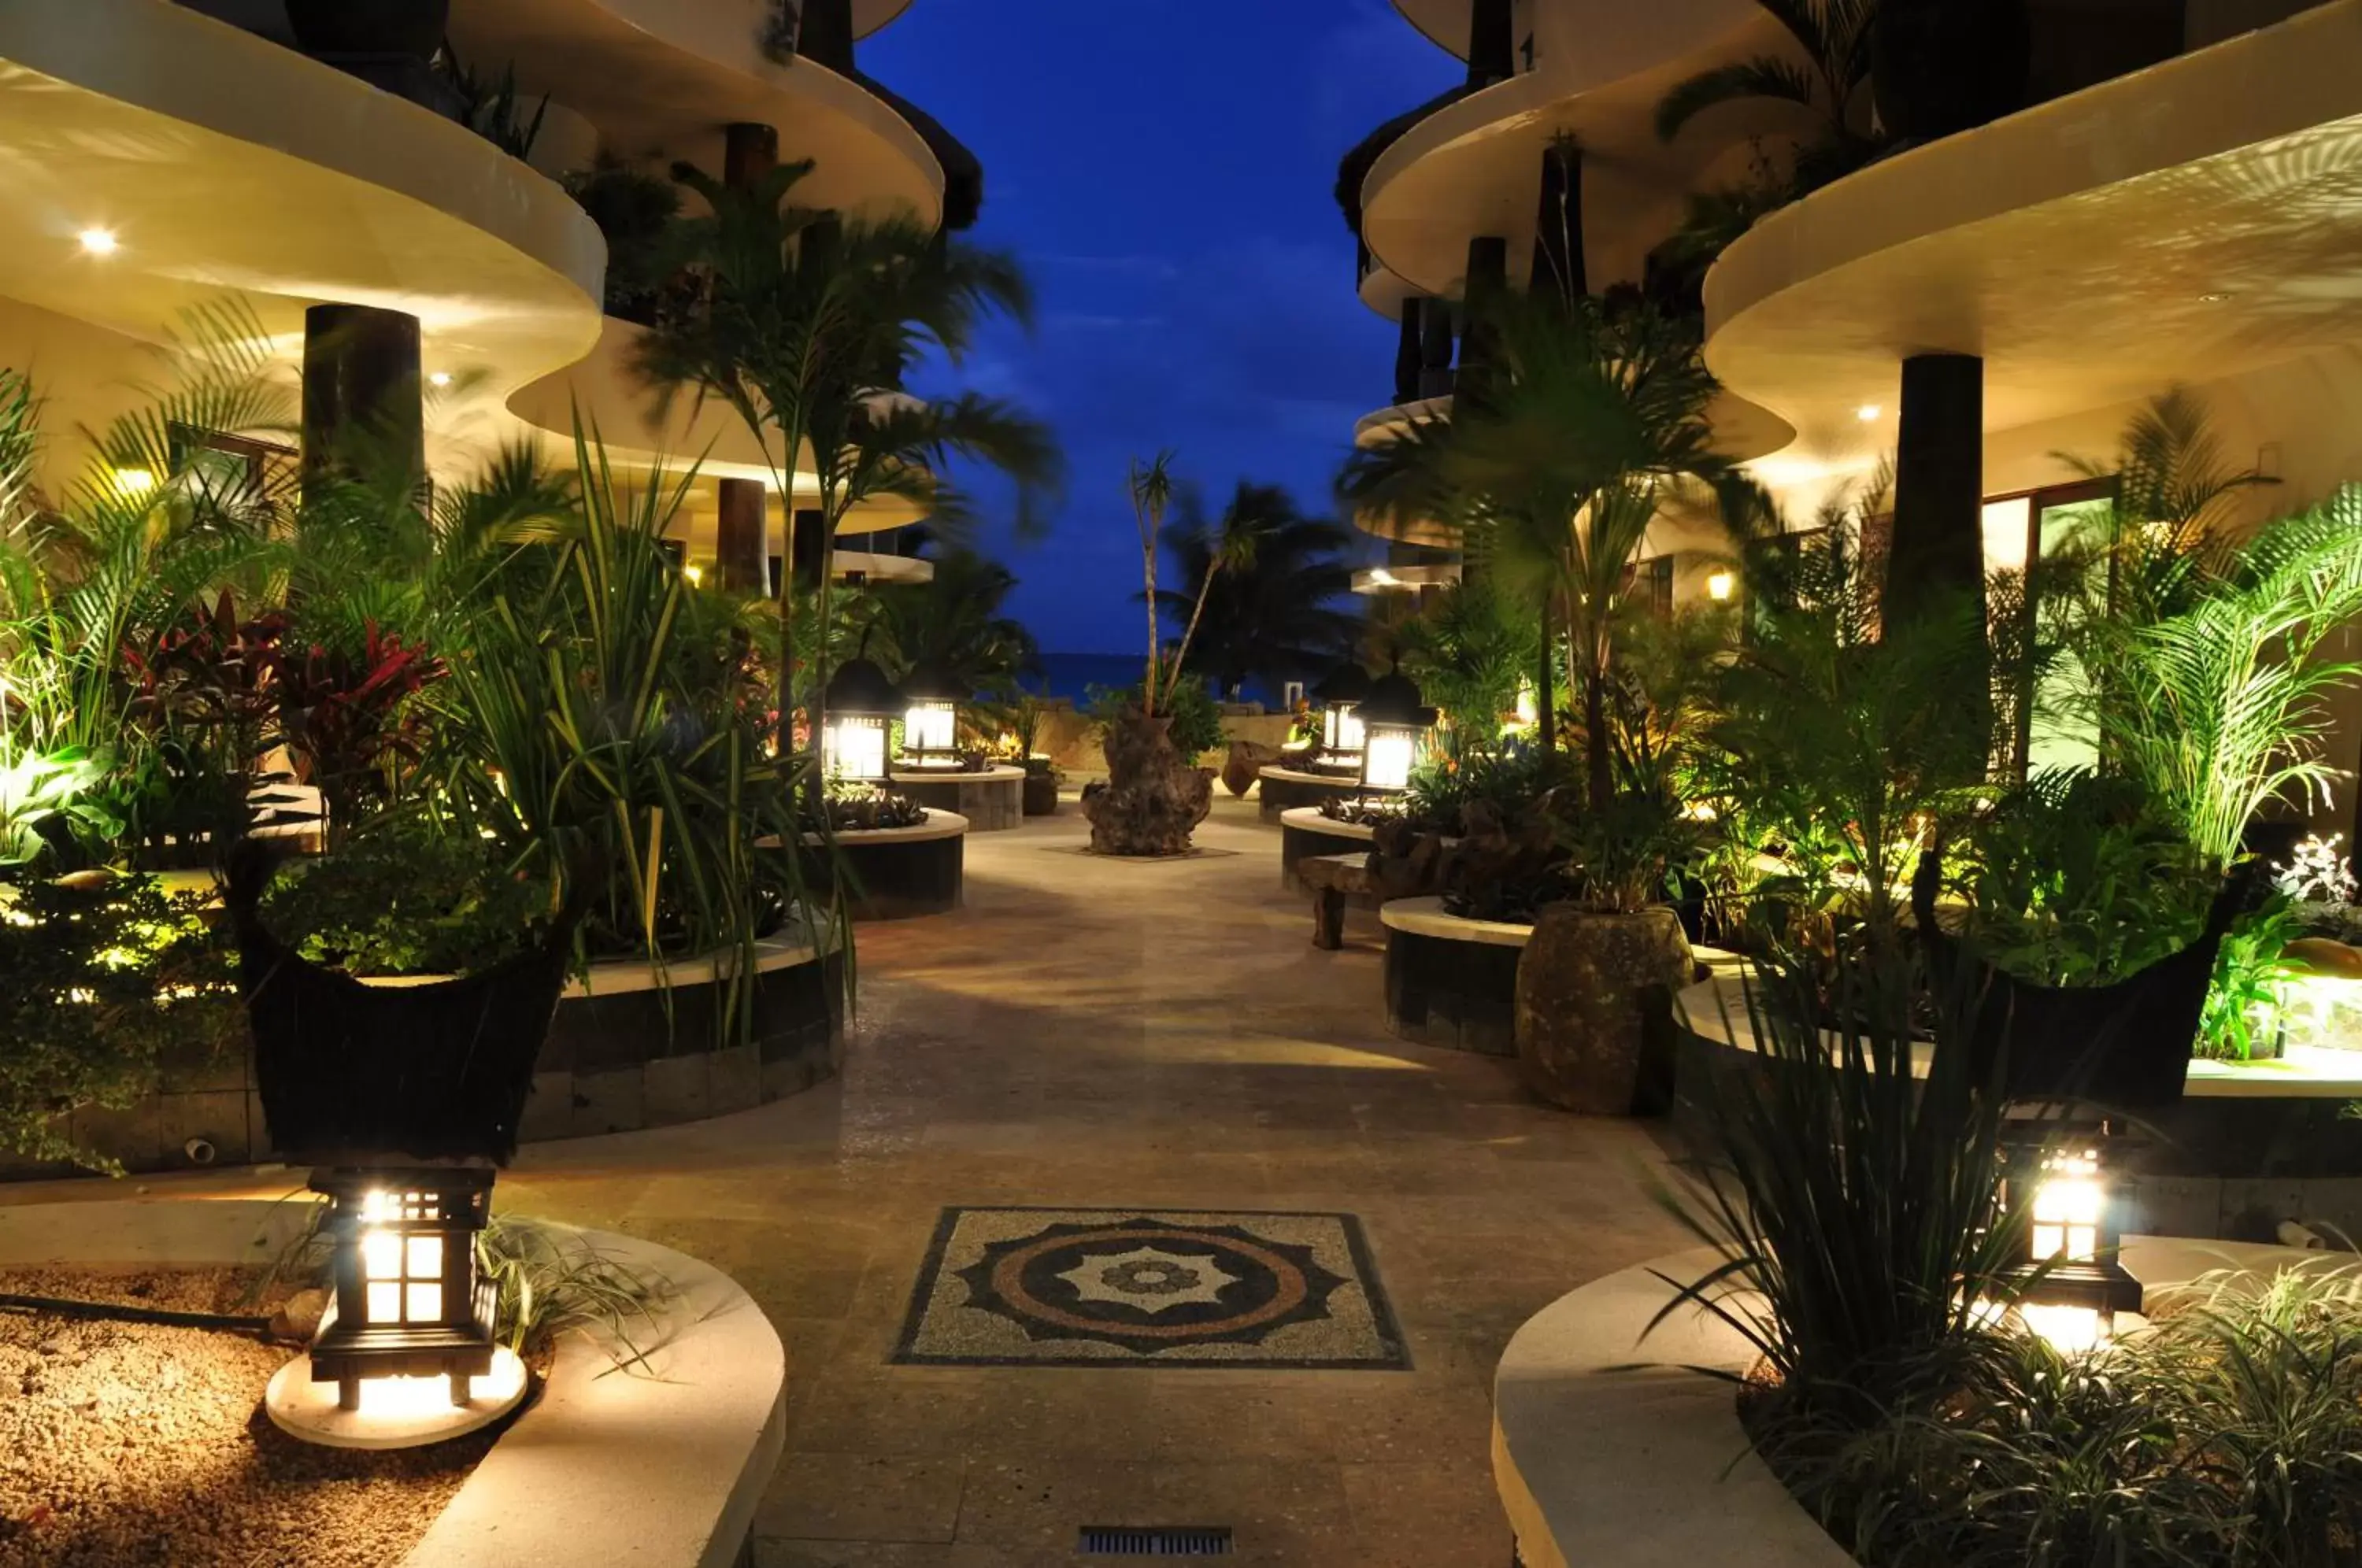 Inner courtyard view in El Taj Oceanfront and Beachside Condo Hotel